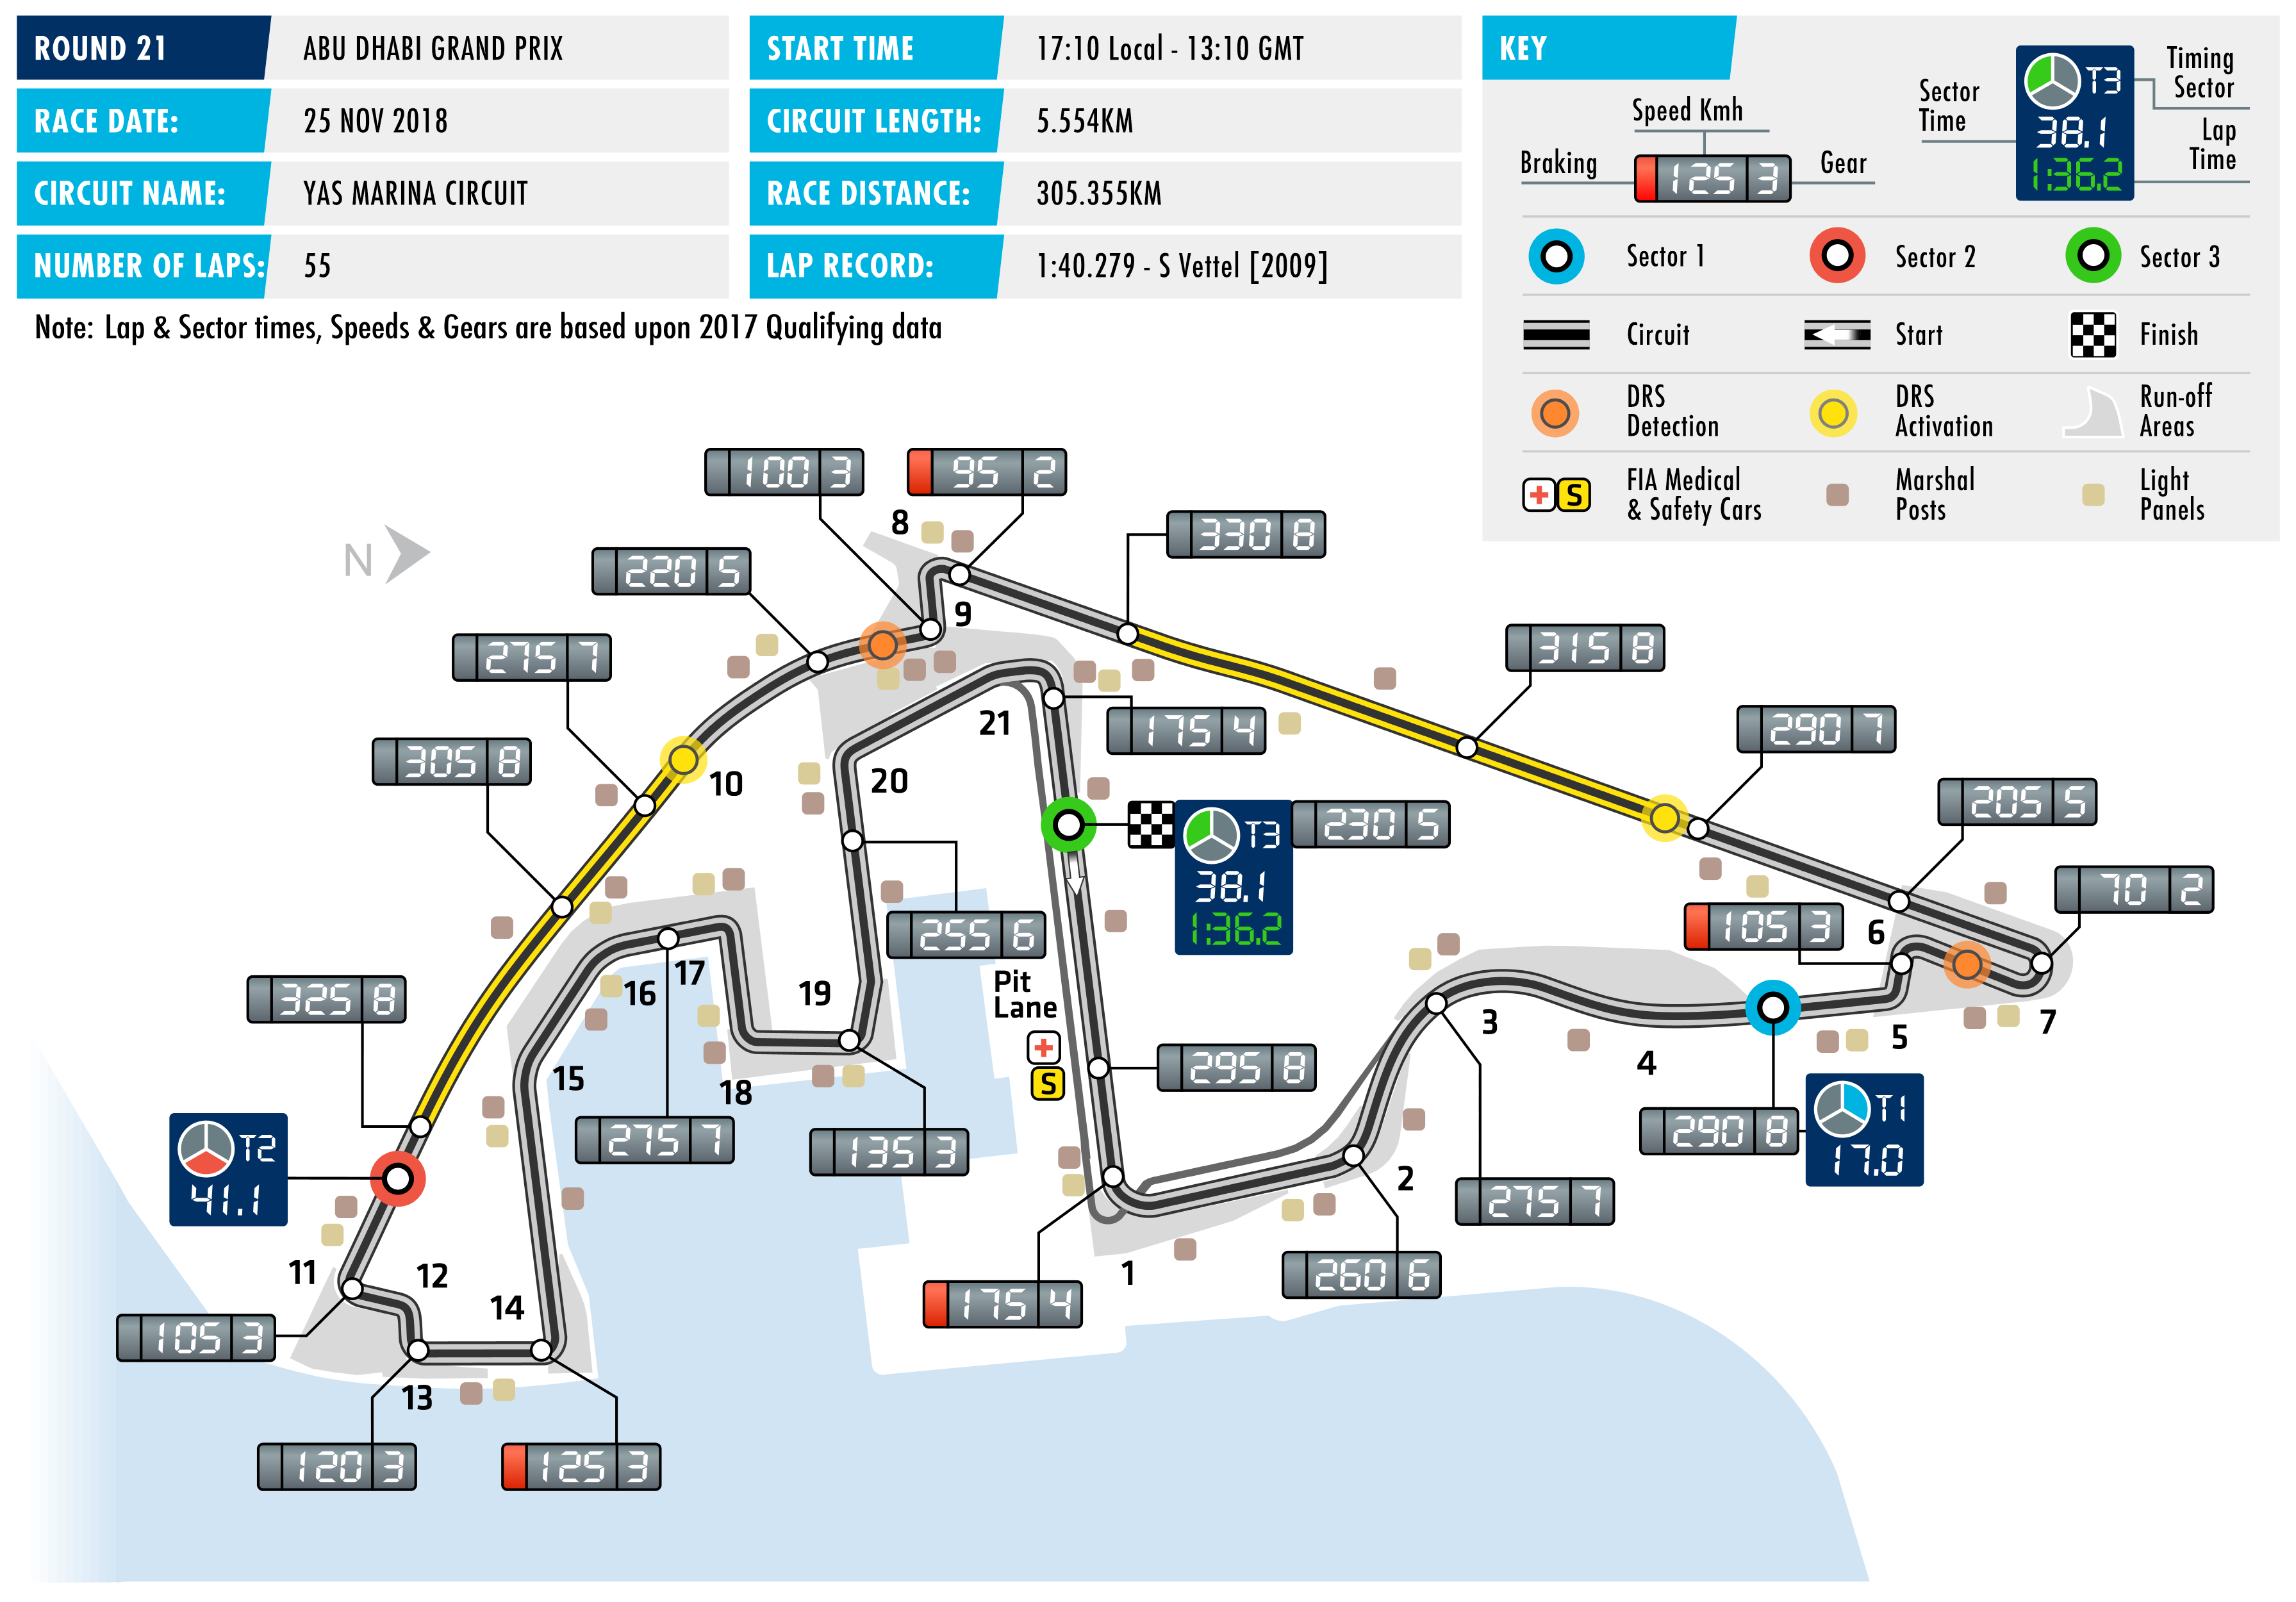 2018 Abu Dhabi Grand Prix - Circuit Map